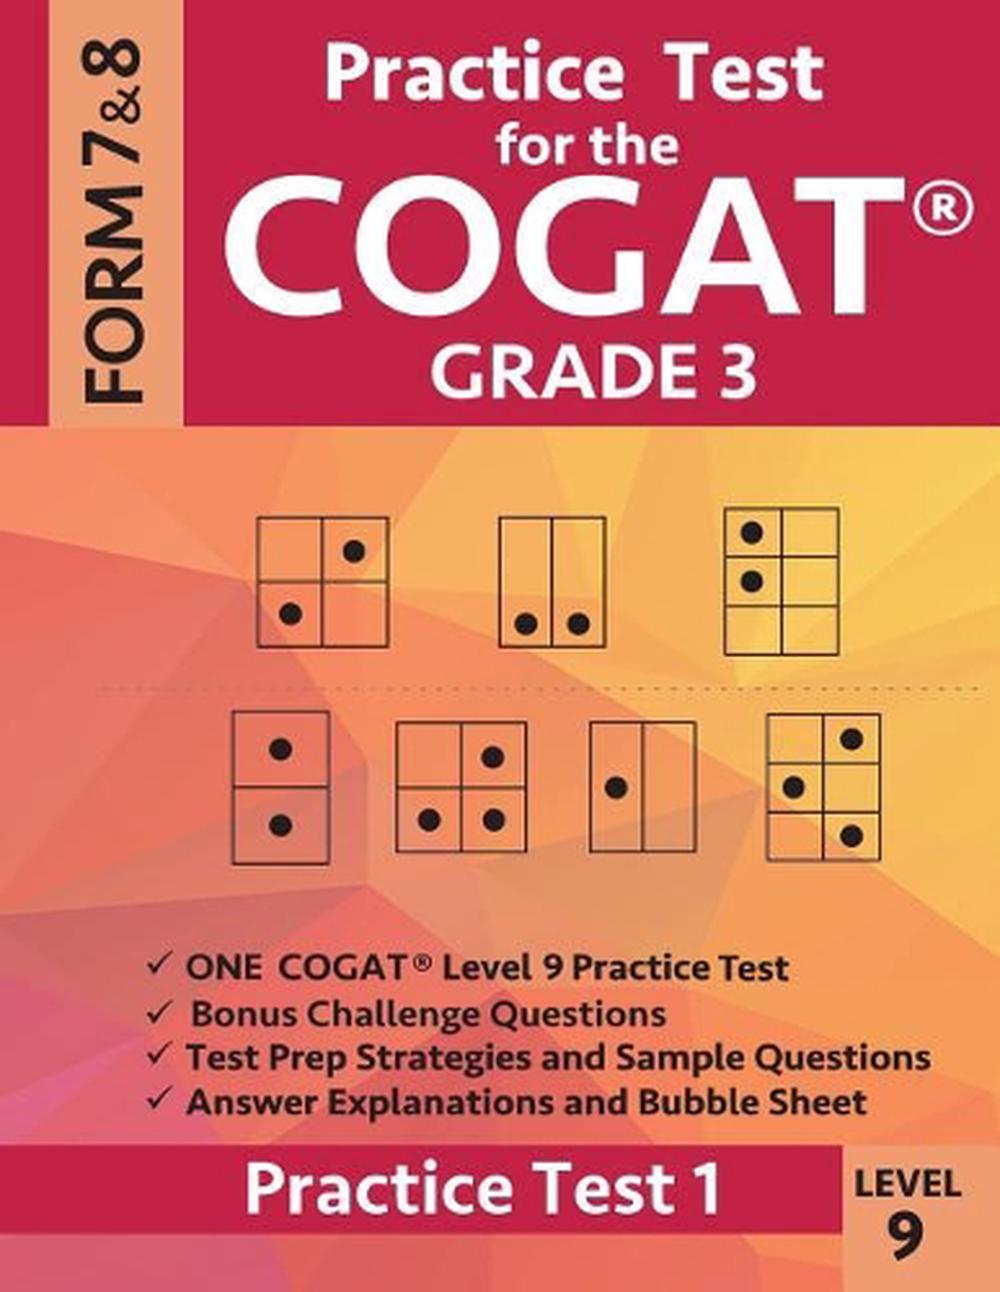 Cogat practice test for 3rd grade